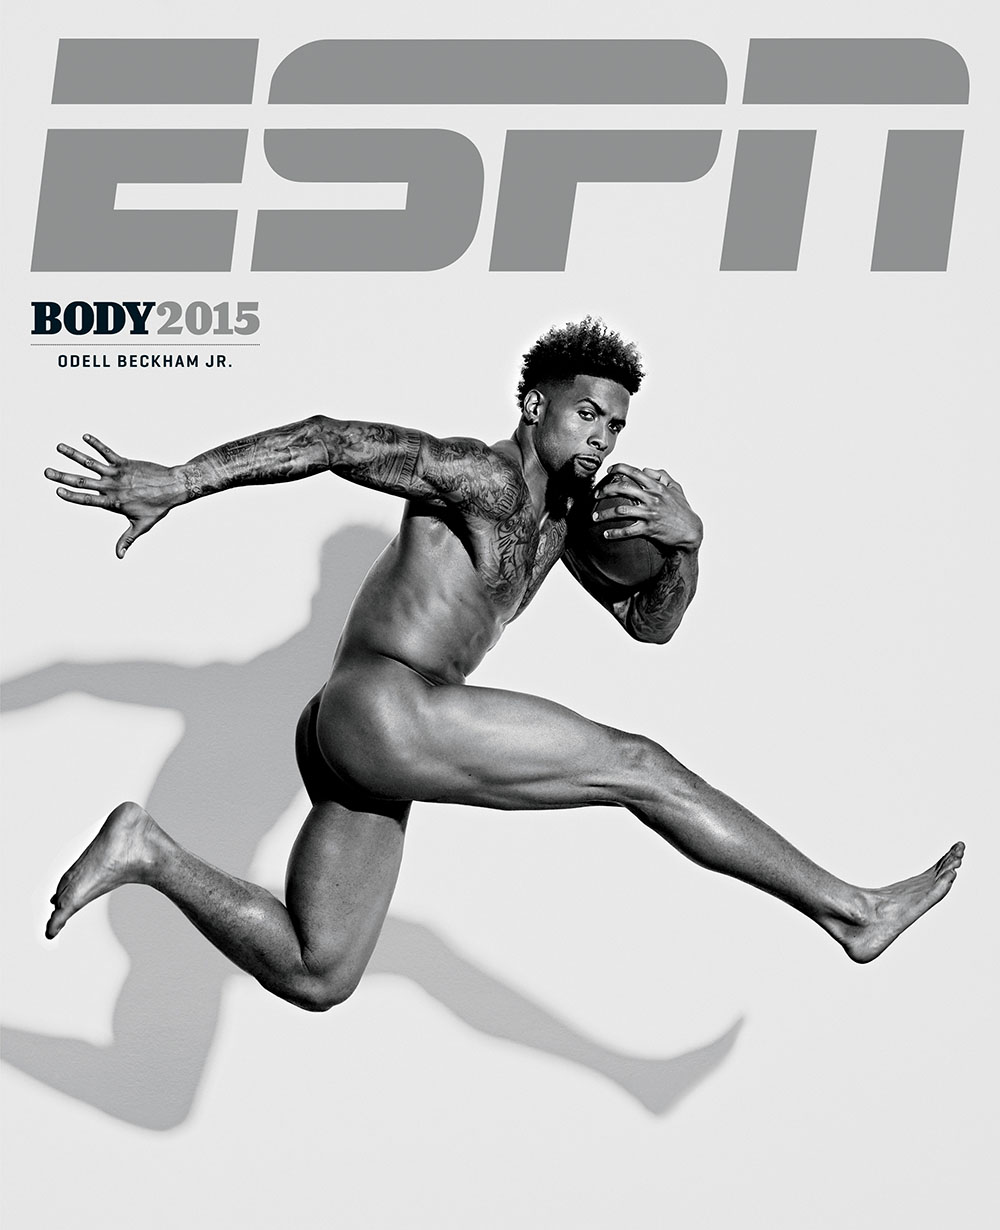 Noticias de fotografía - Desnudos deportivos impresionantes de ESPN Odell Beckham Jr. fotografiados por Carlos Serrao